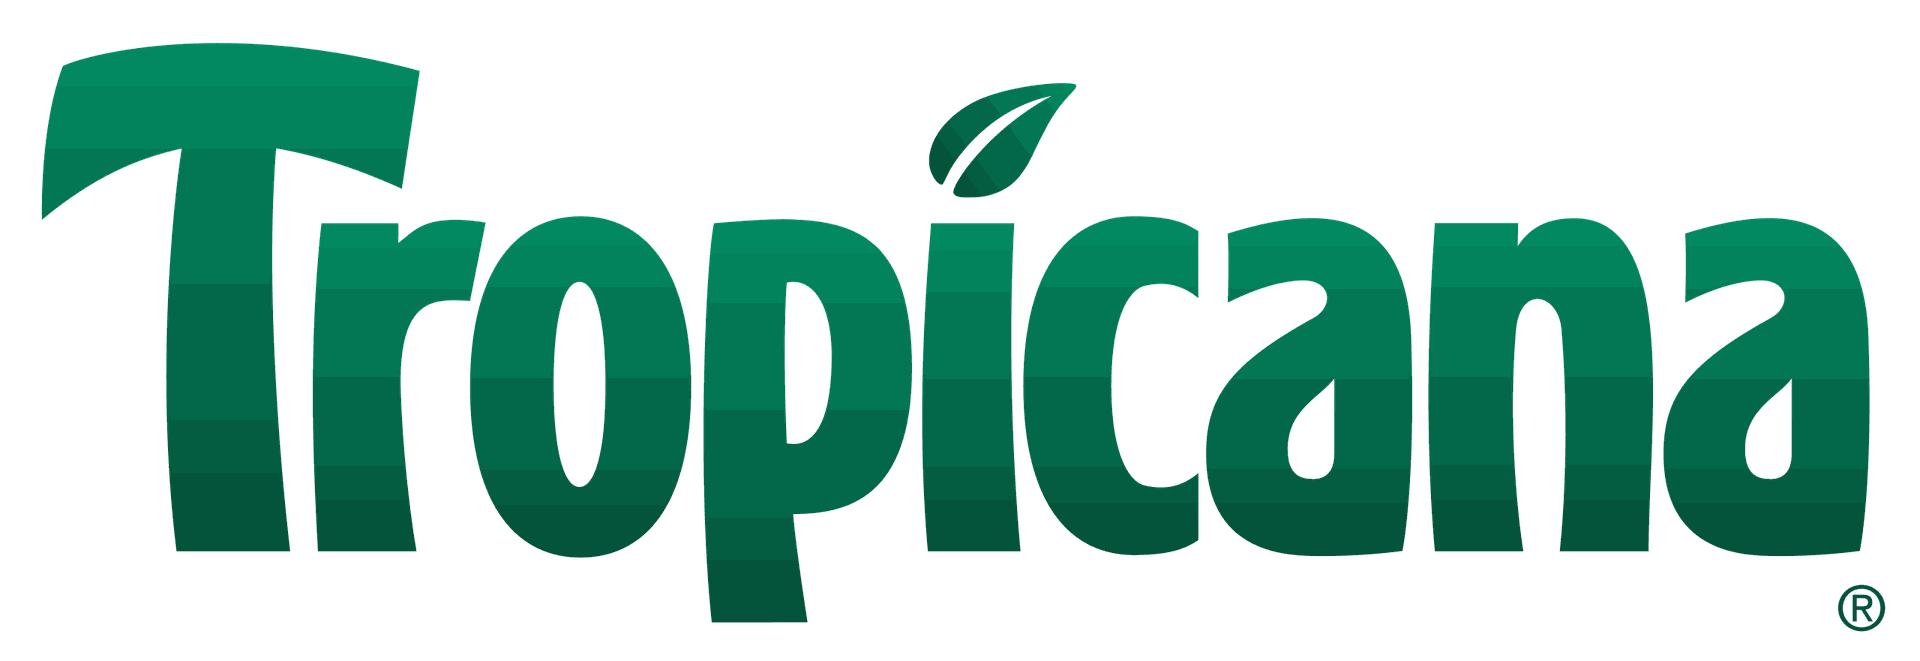 Brand: Tropicana